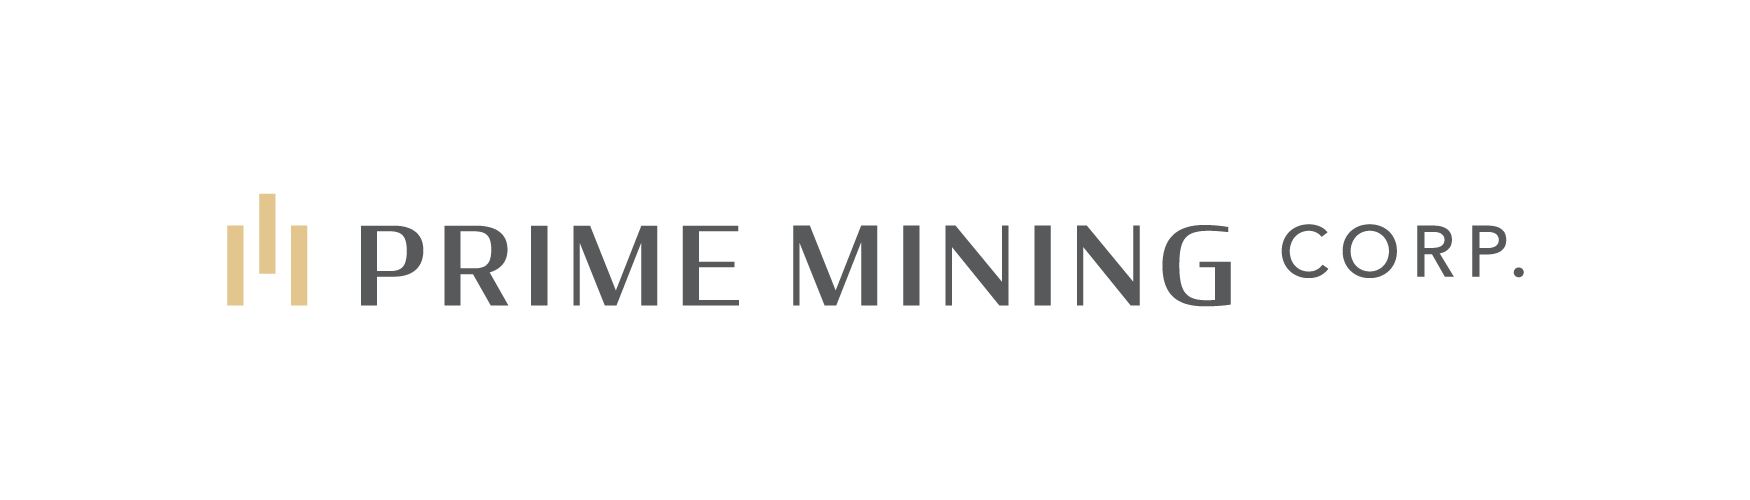 CORRECTION - Prime Mining Corp.